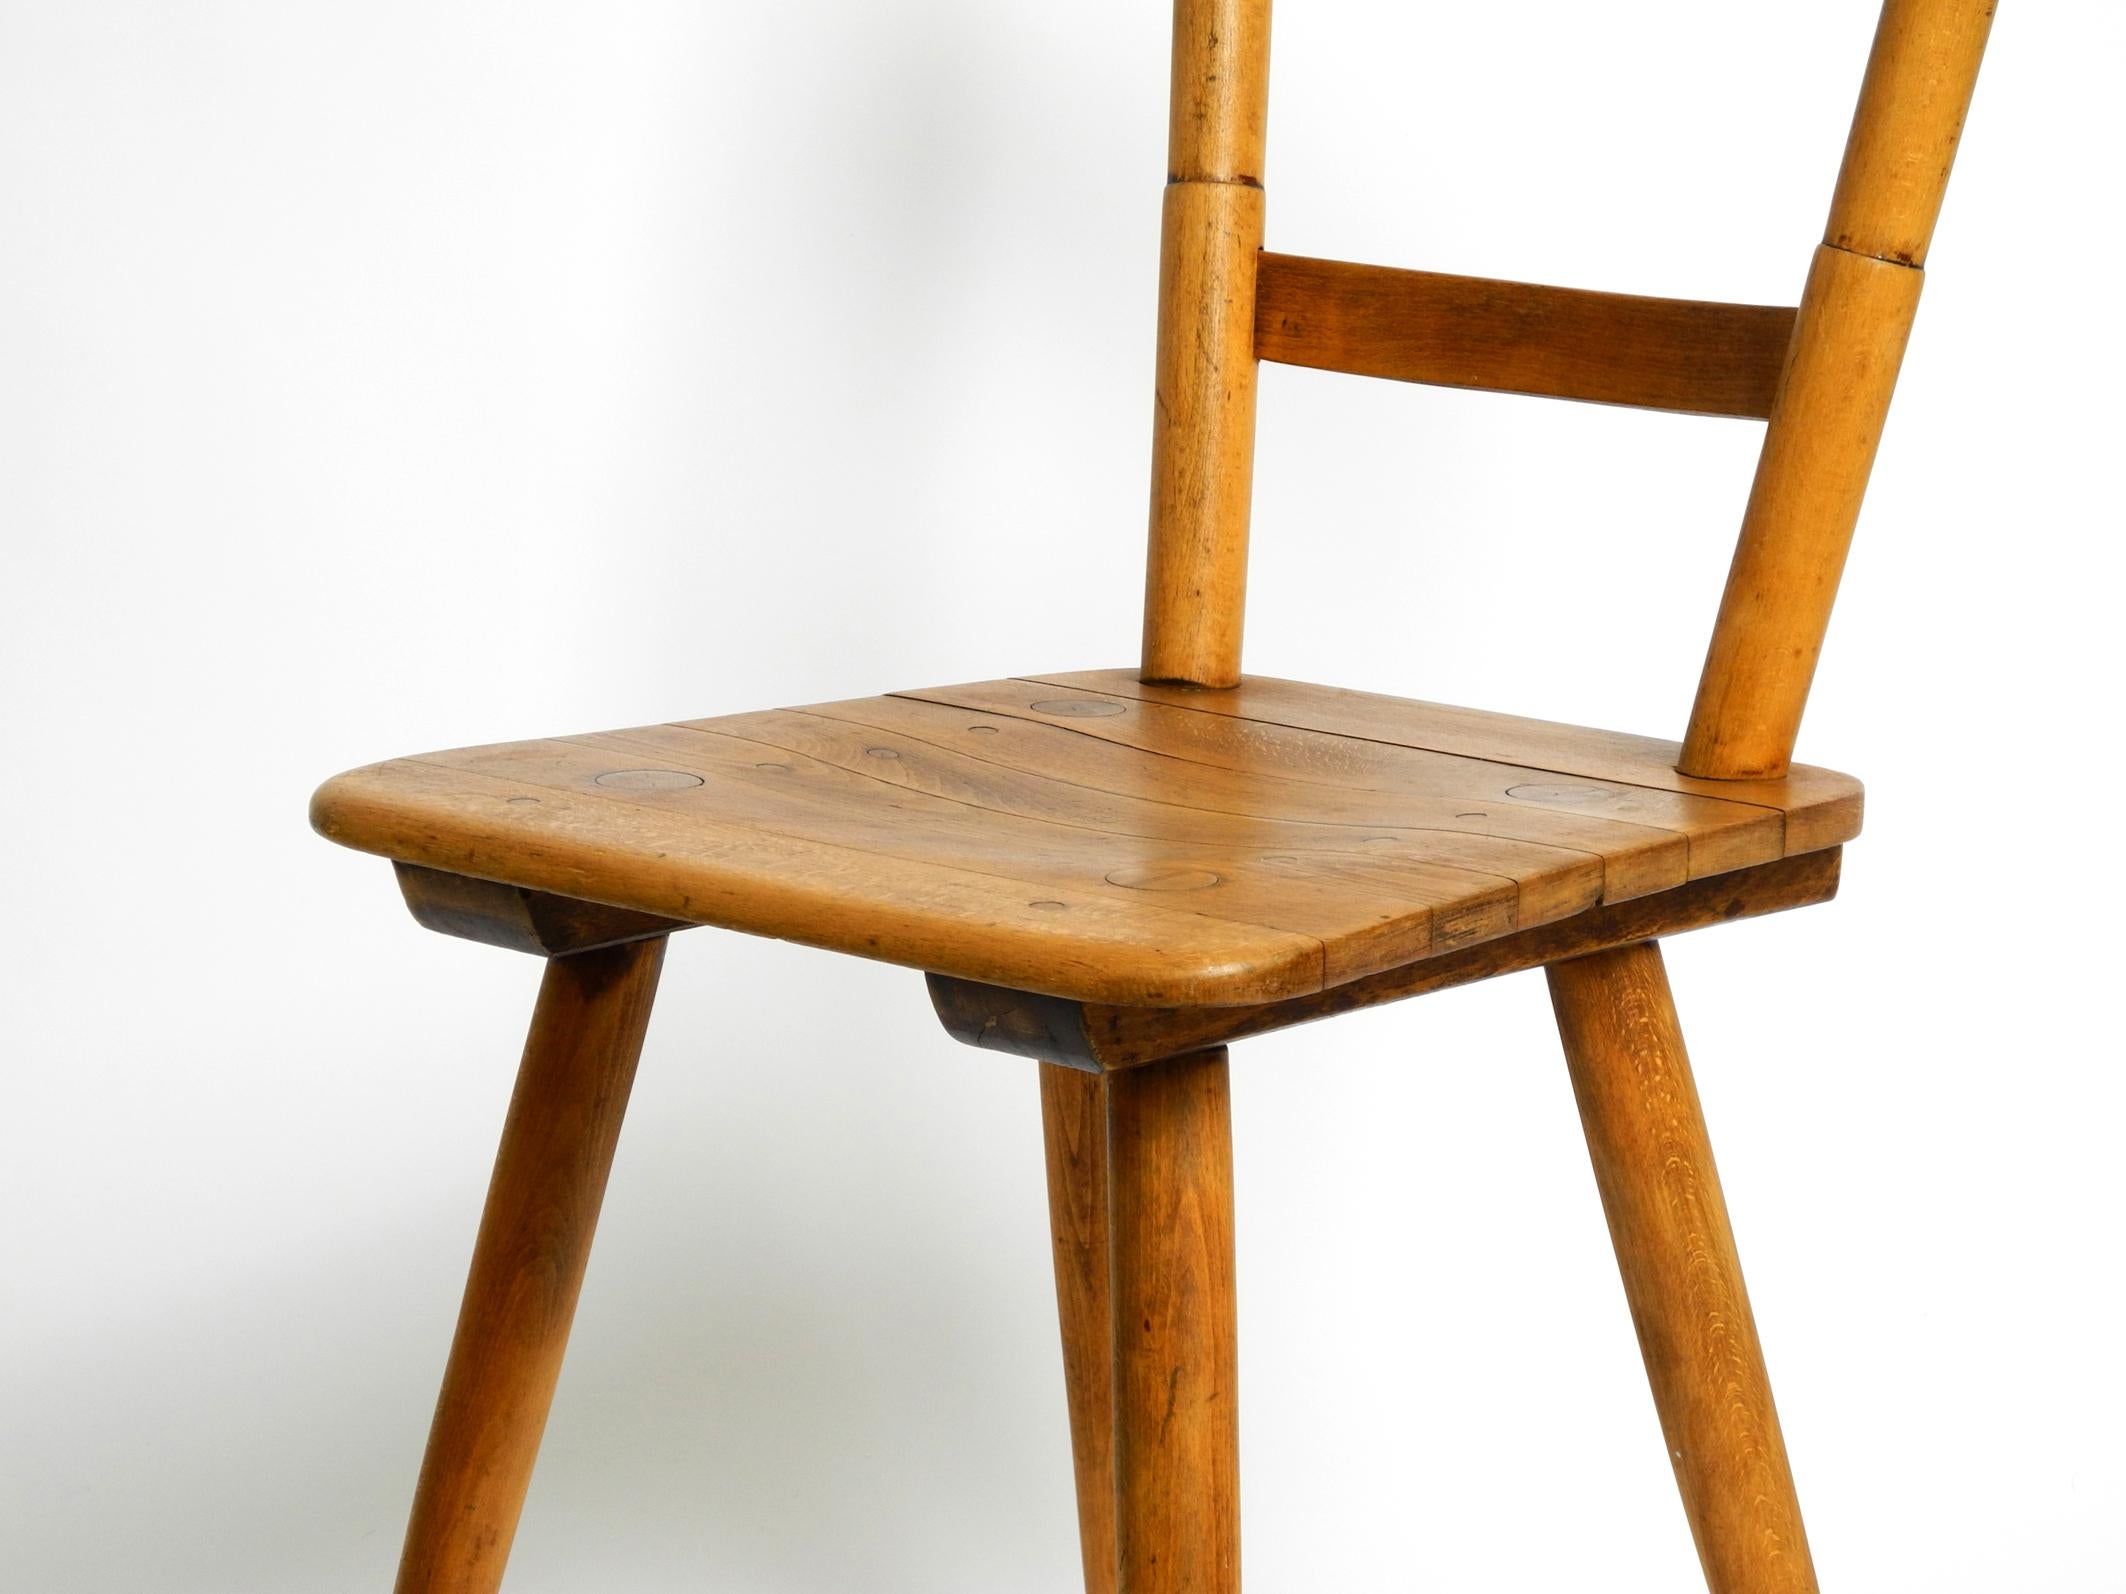 1930s Tübinger chair by the architect Prof. Adolf Gustav Schneck for Schäfer  For Sale 6